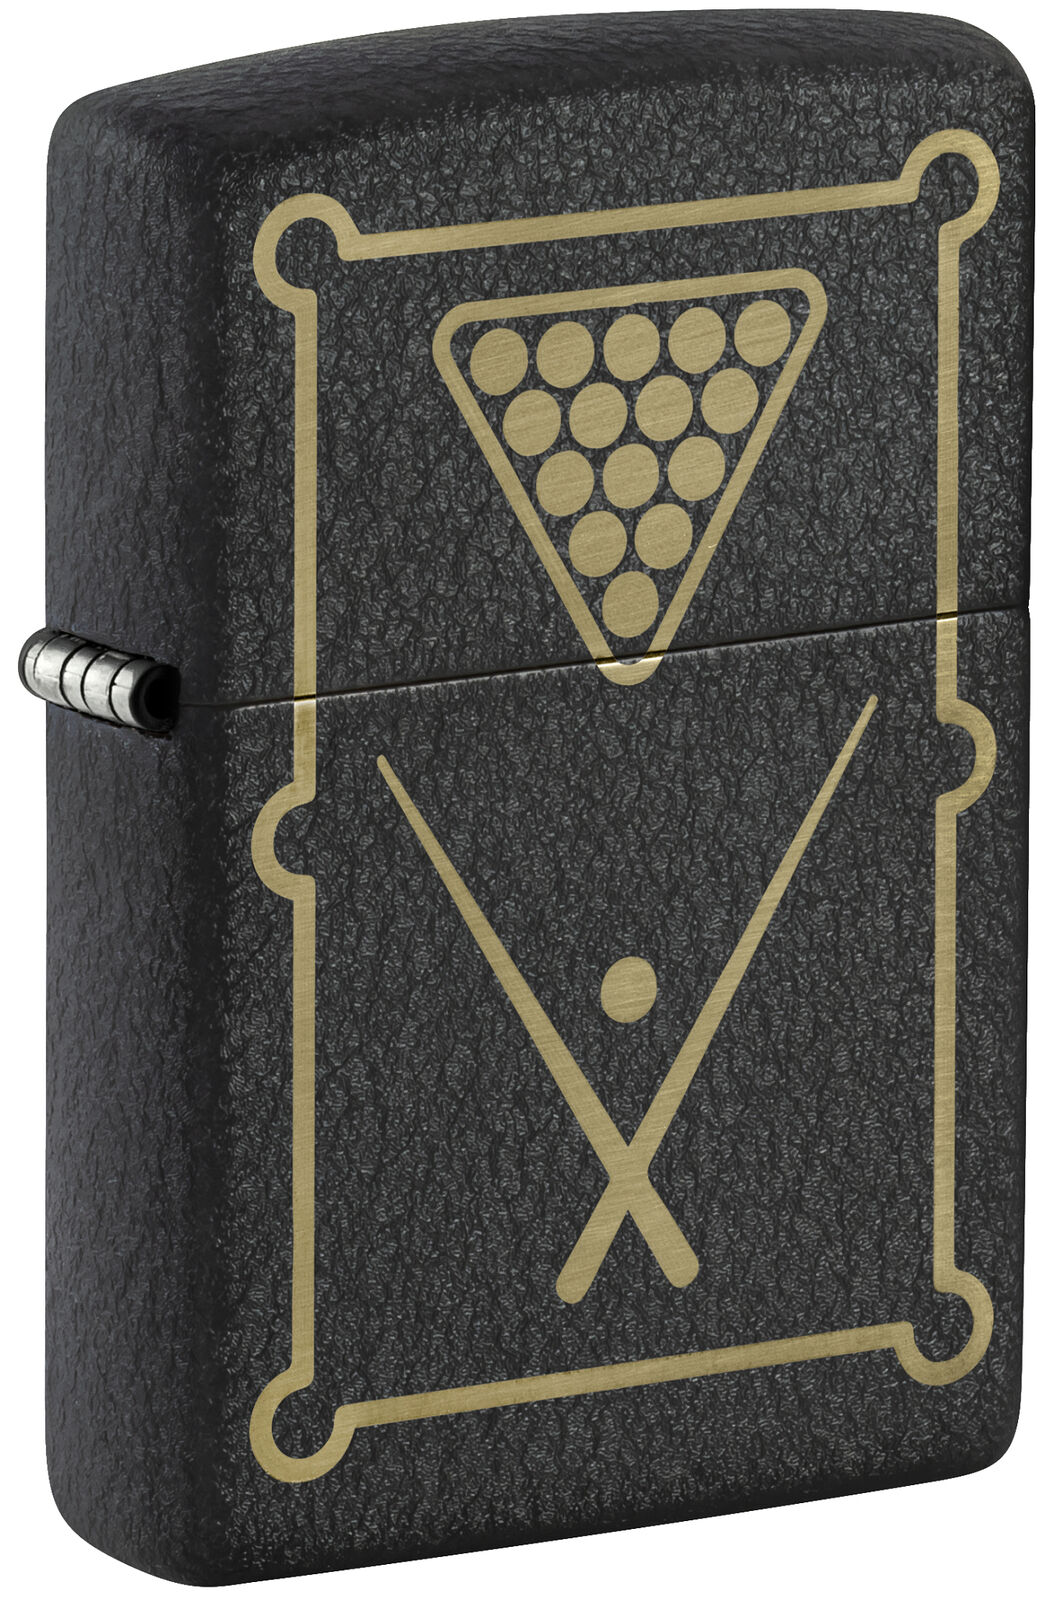 Zippo Billiards Design Black Crackle Windproof Lighter, 48672